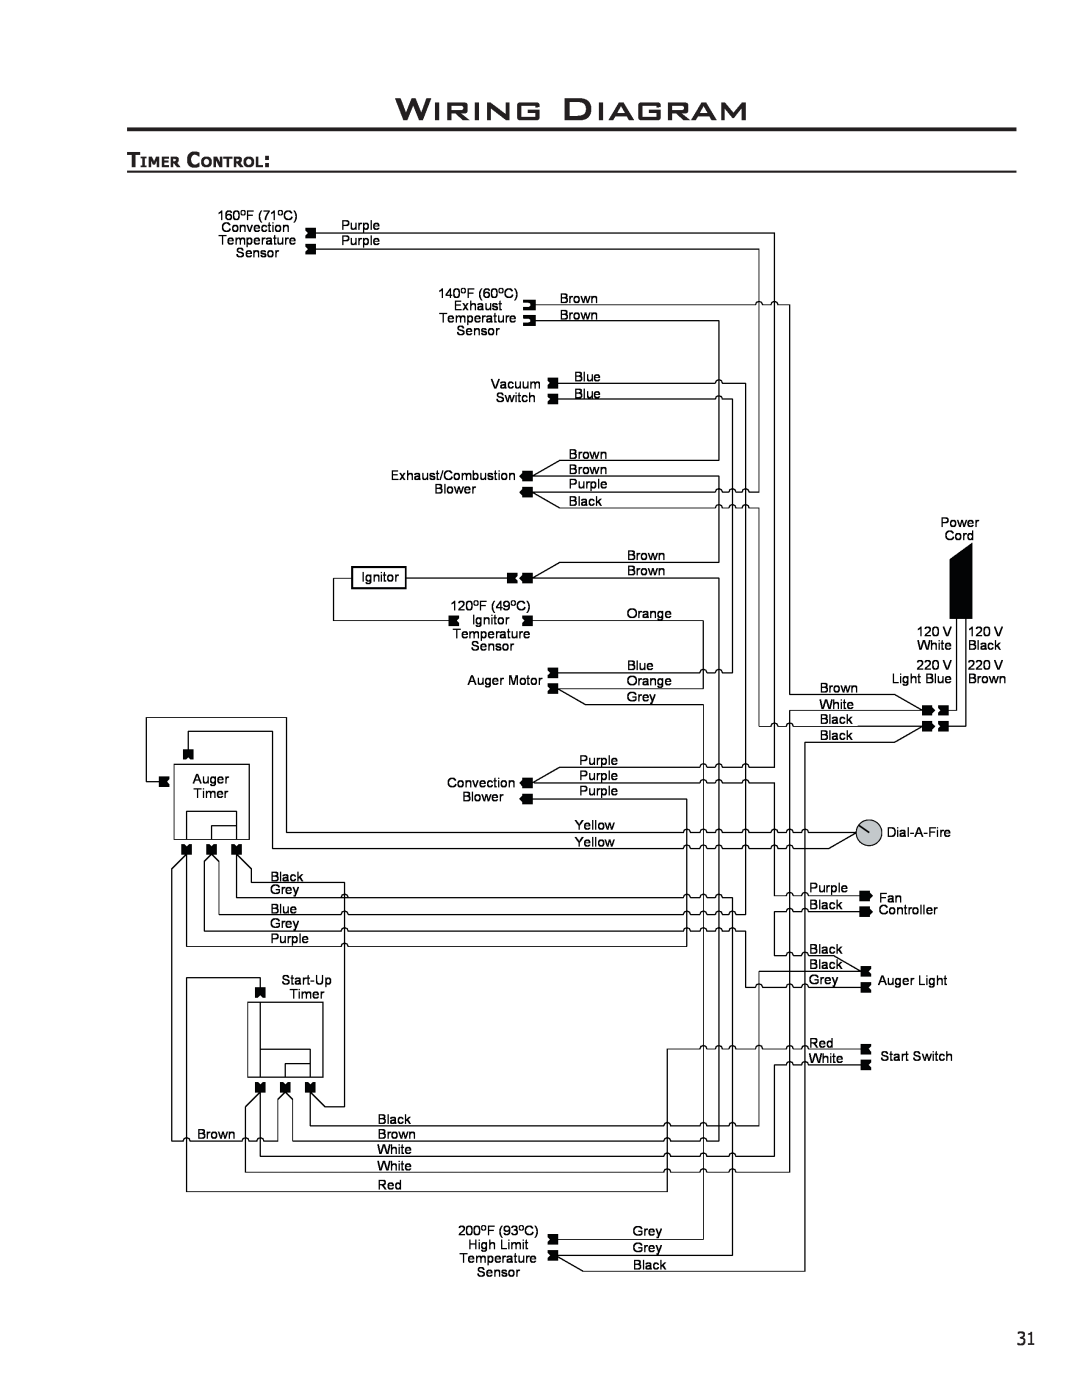 Enviro EF3 owner manual Wiring Diagram, Timer Control 